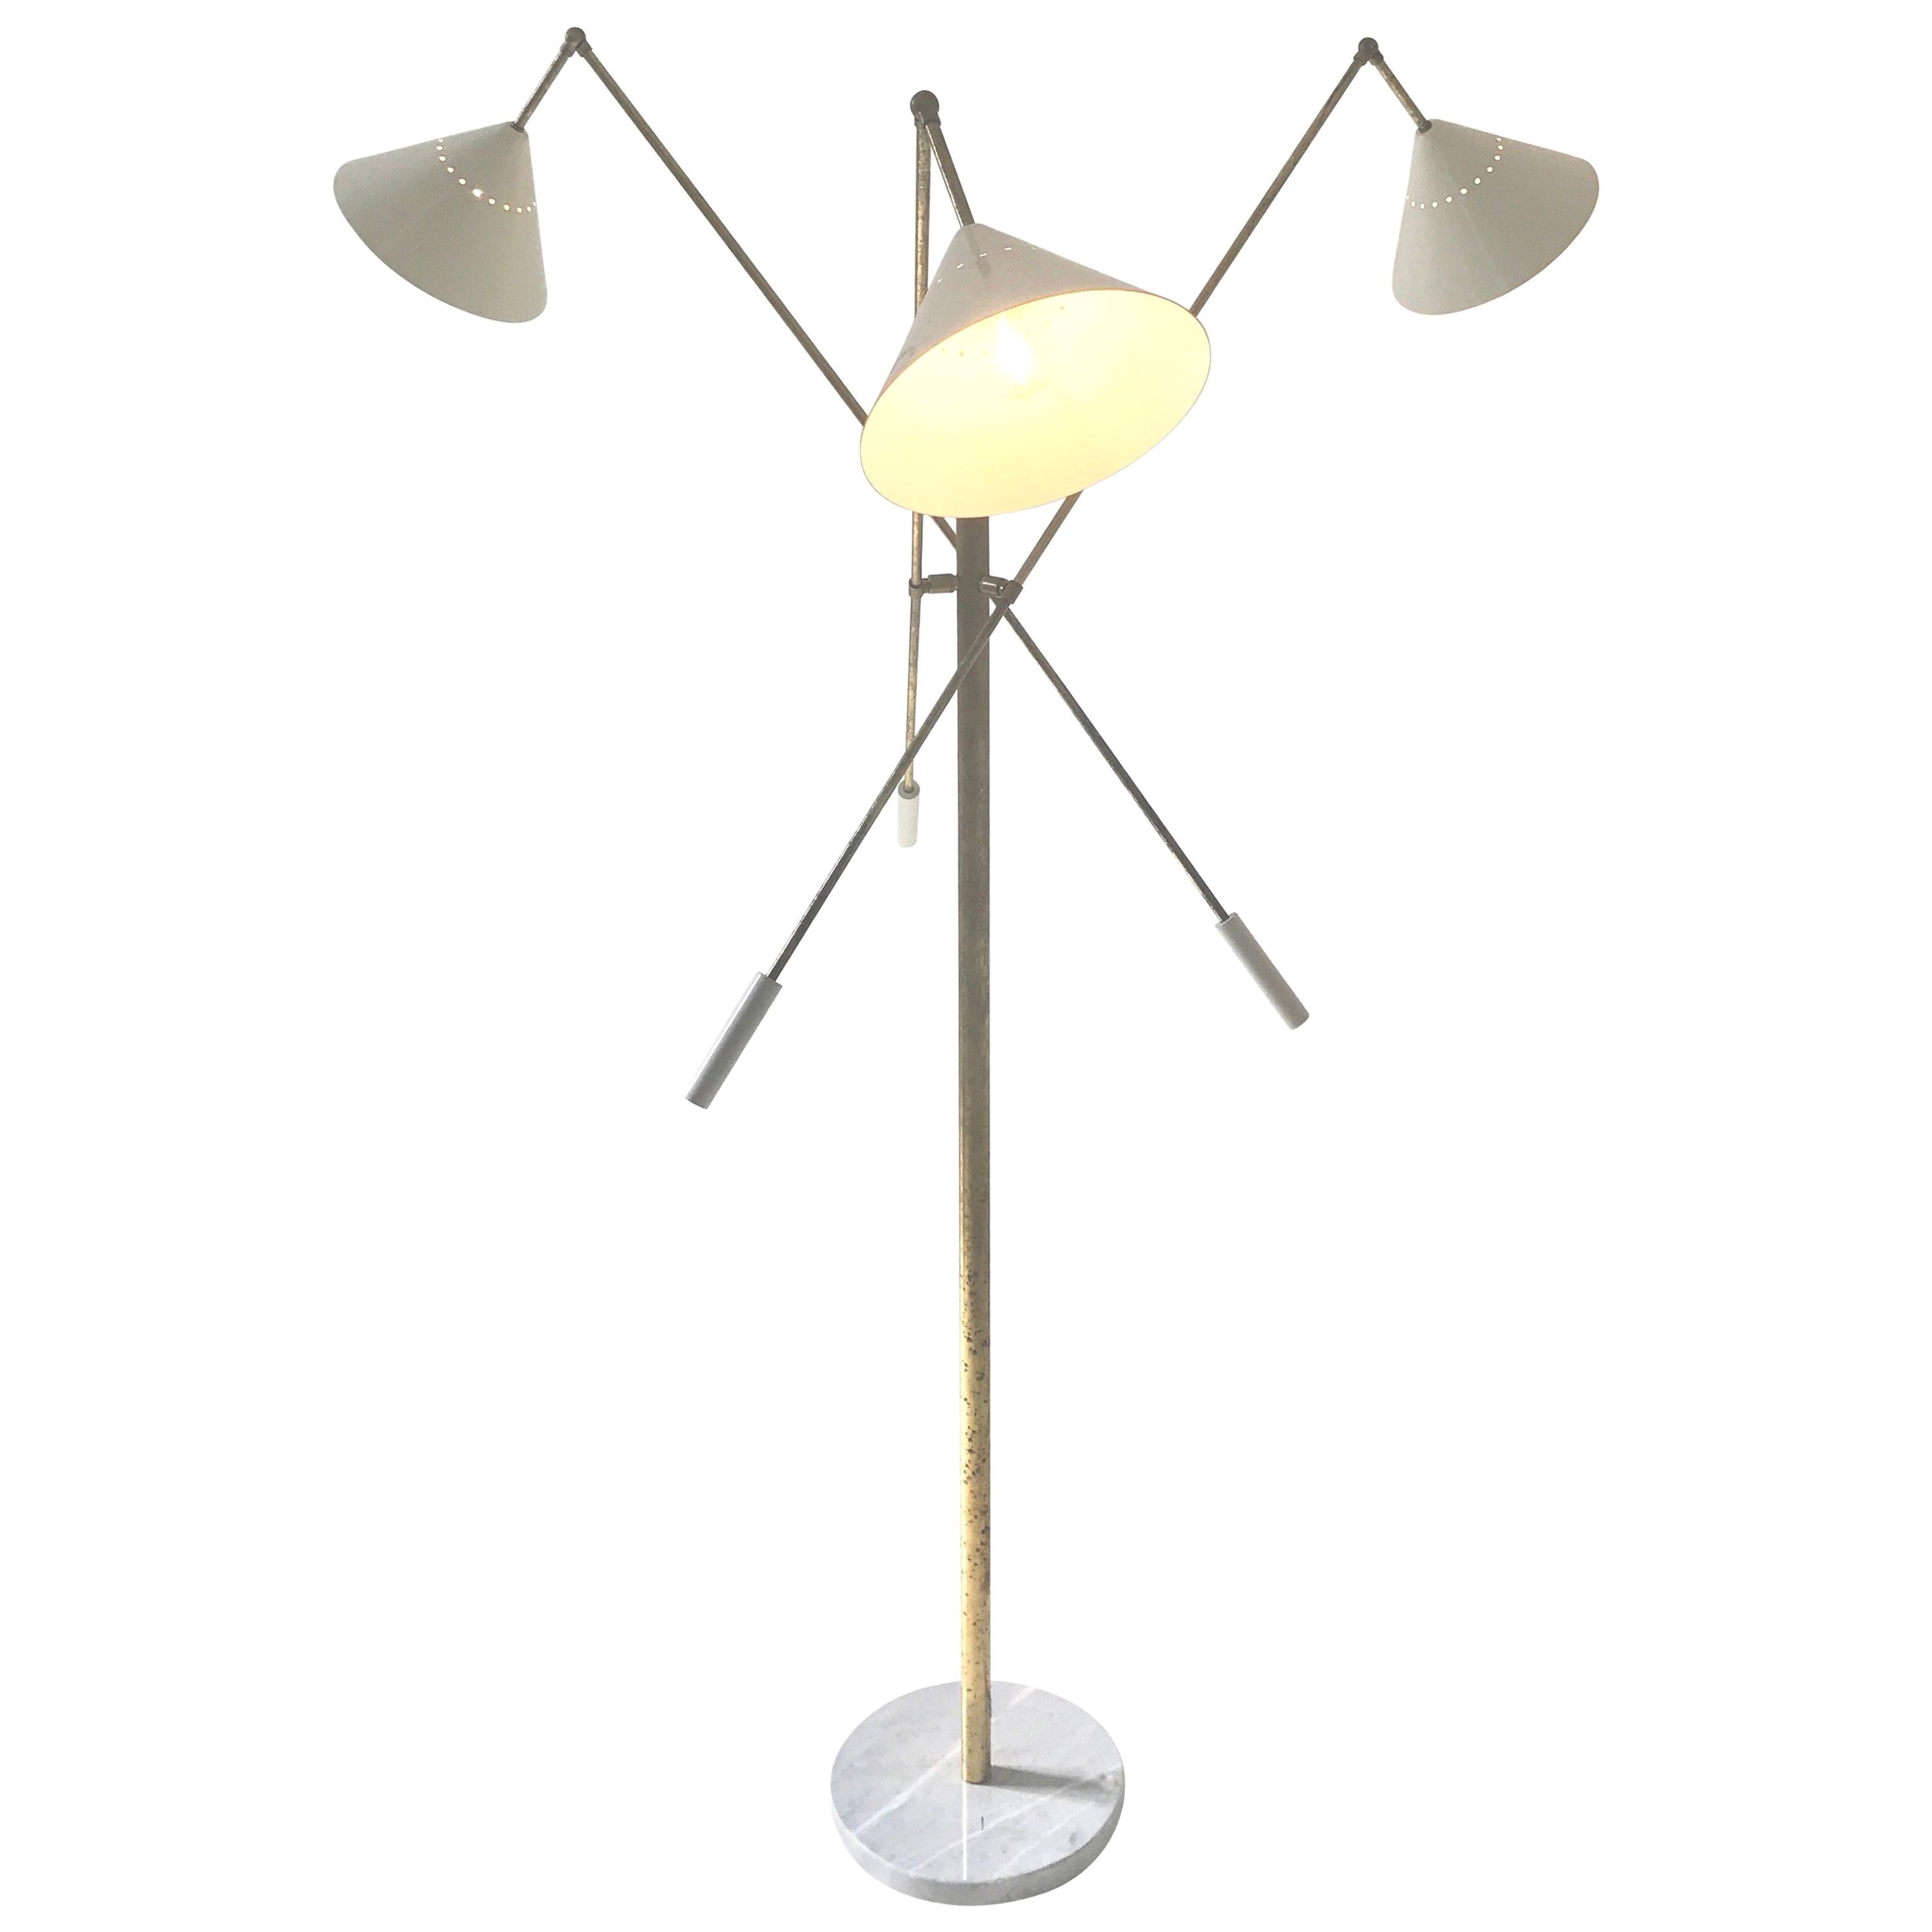 Italian Three-Arm Floor Lamp, 'Triennale' Arredoluce Style